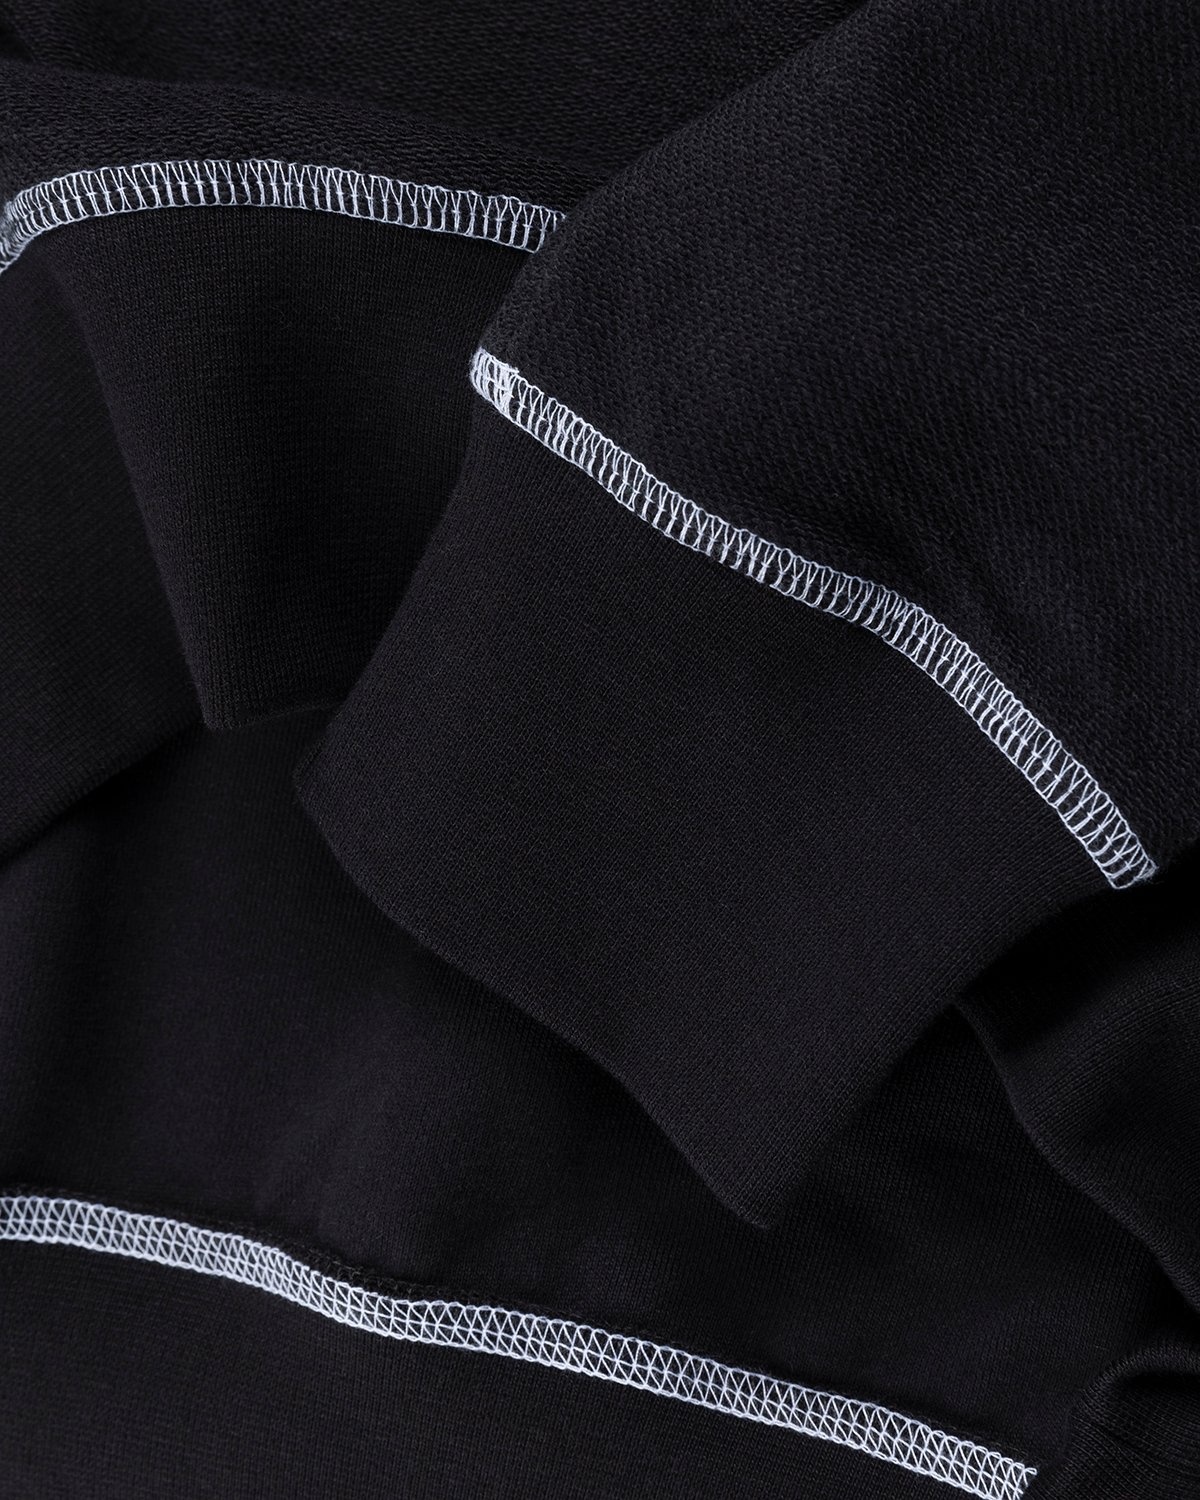 J.W. Anderson – Inside Out Contrast Sweatshirt Black - Sweatshirts - Black - Image 5